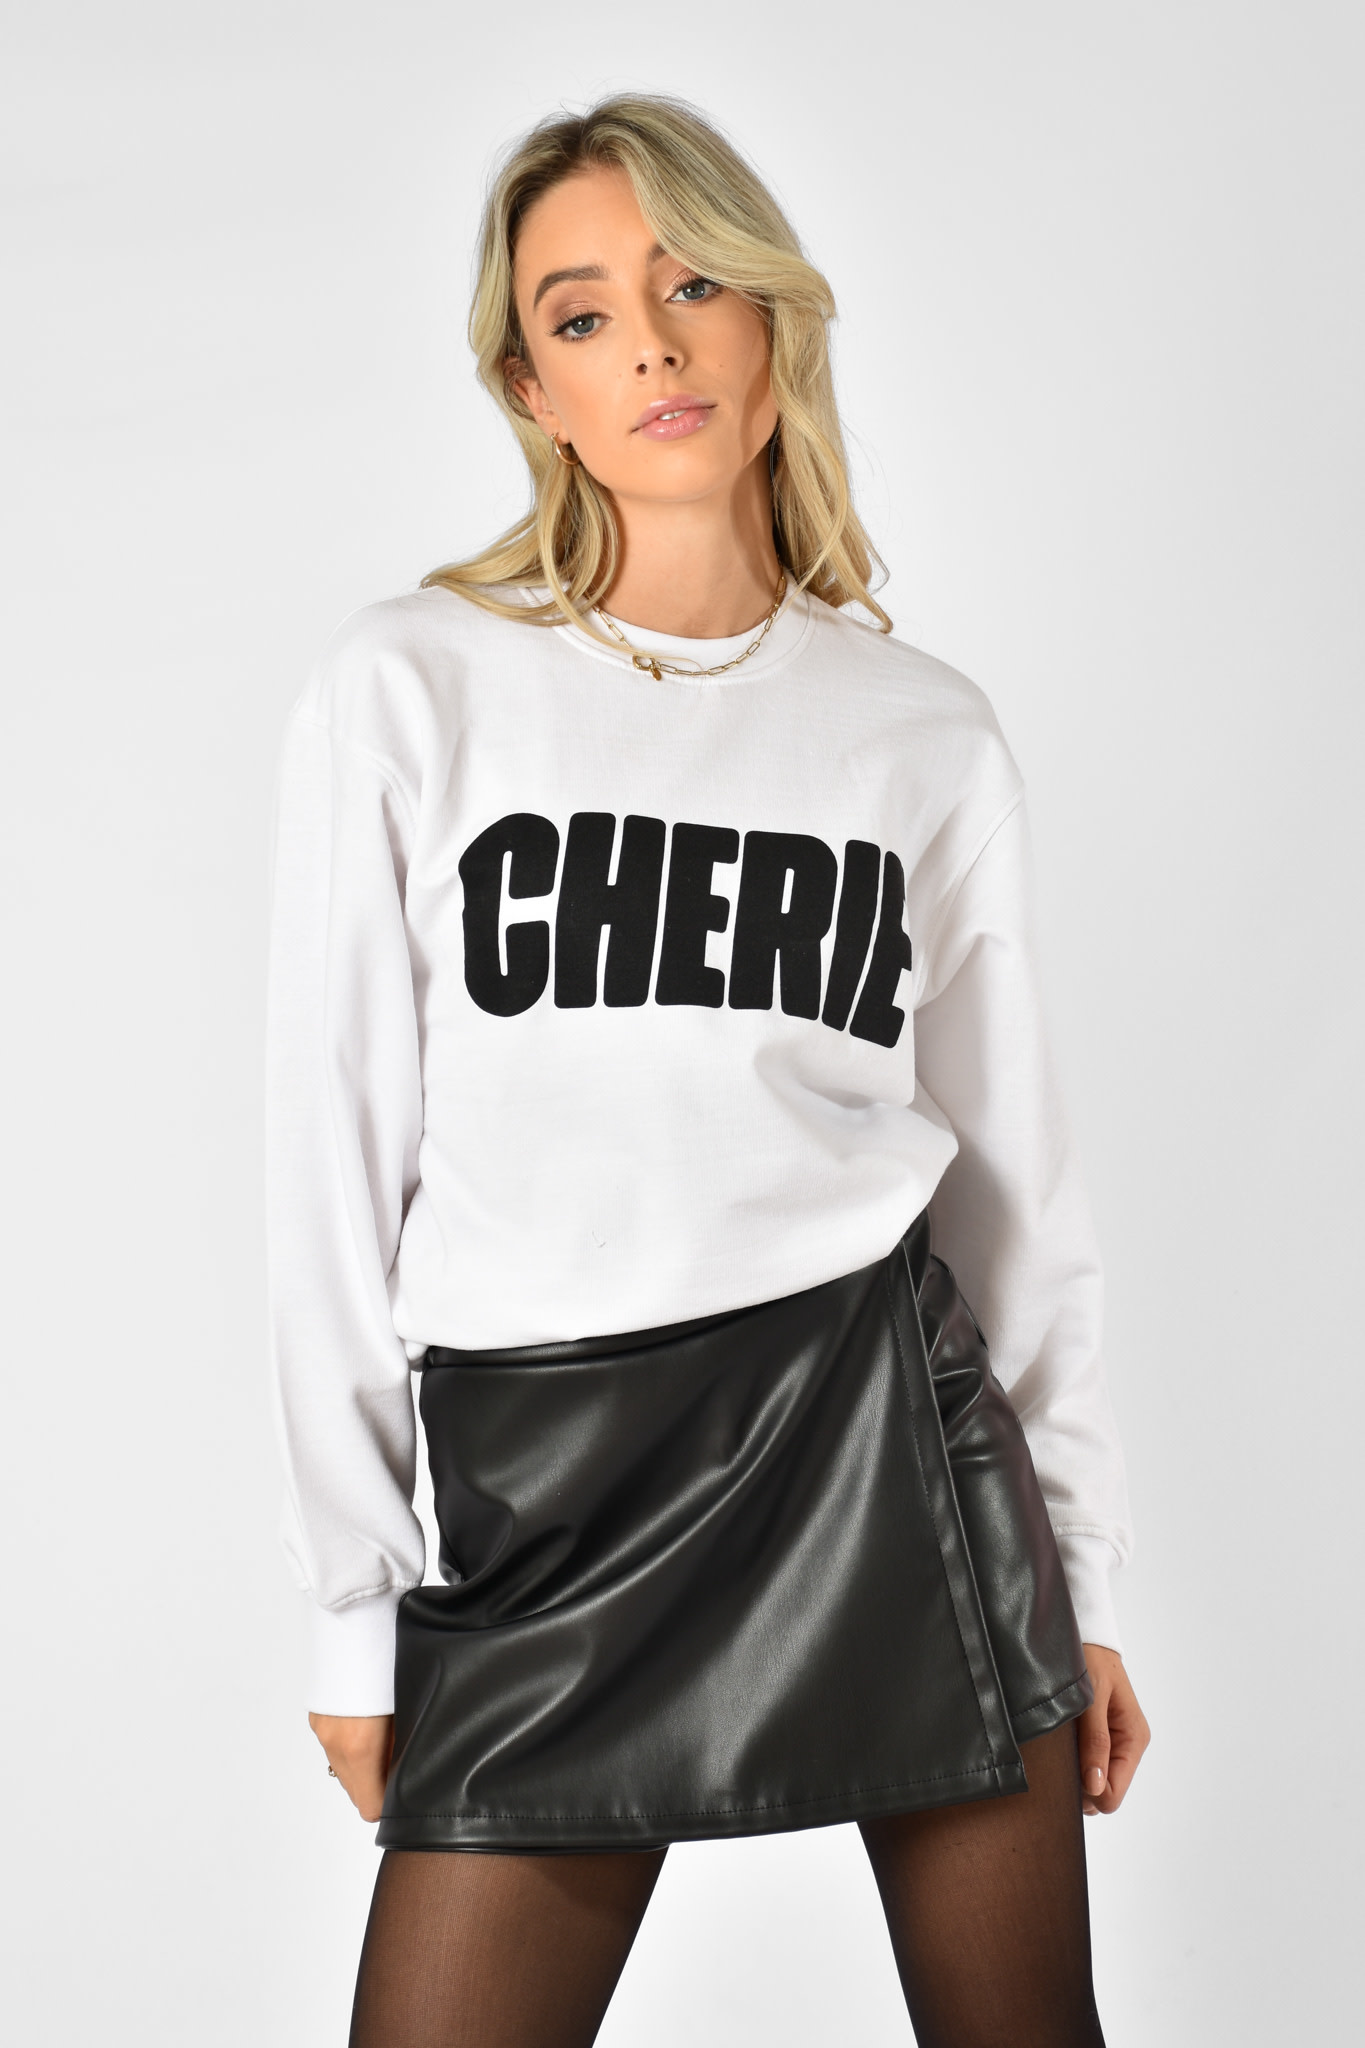 Cherie sweater